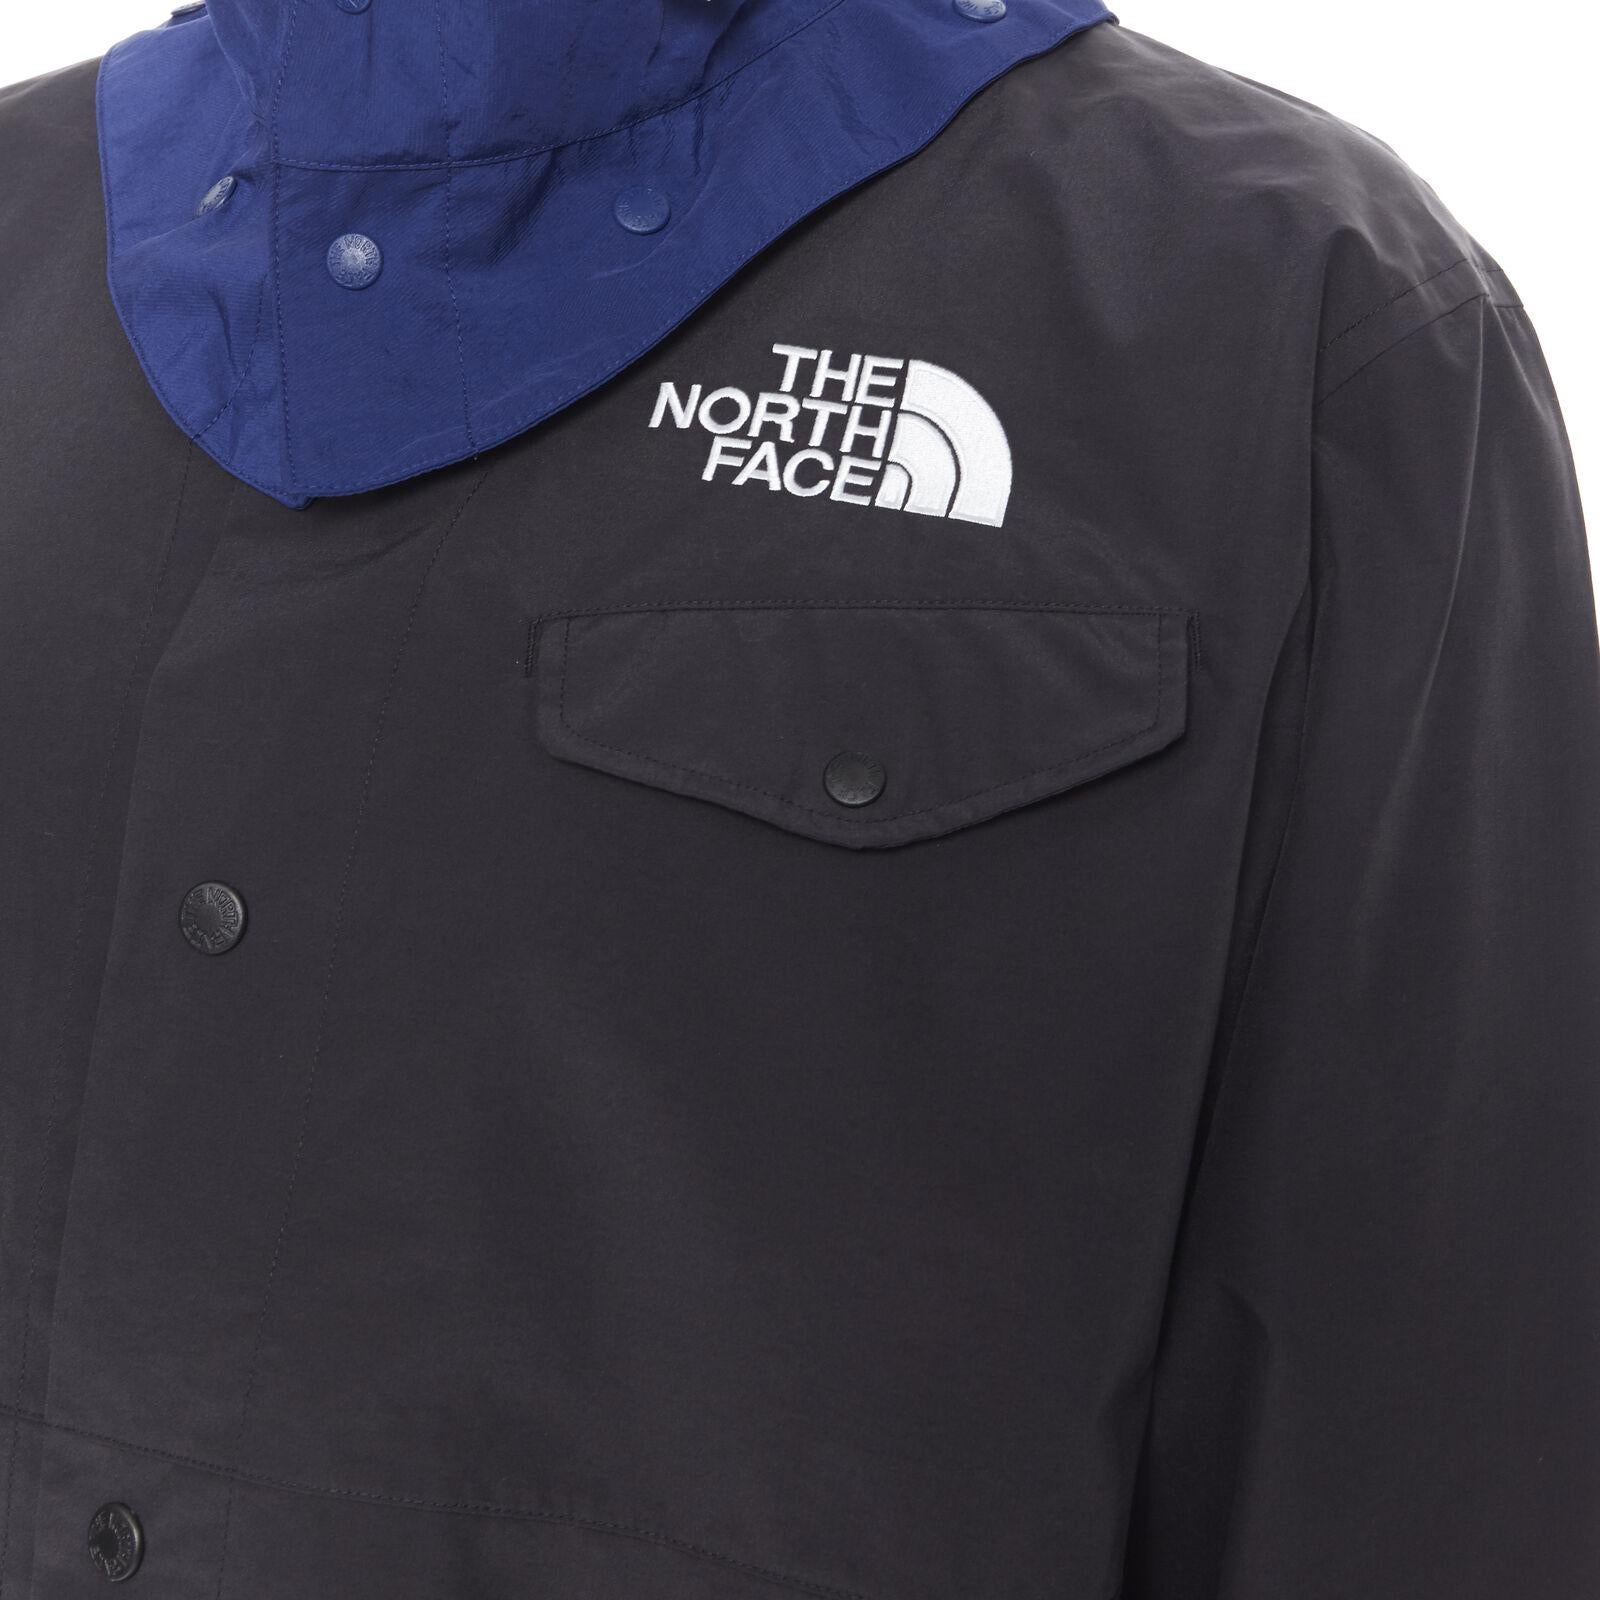 new THE NORTH FACE KAZUKI KURAISHI Black Label Charlie Duty Jacket Black Blue M For Sale 2